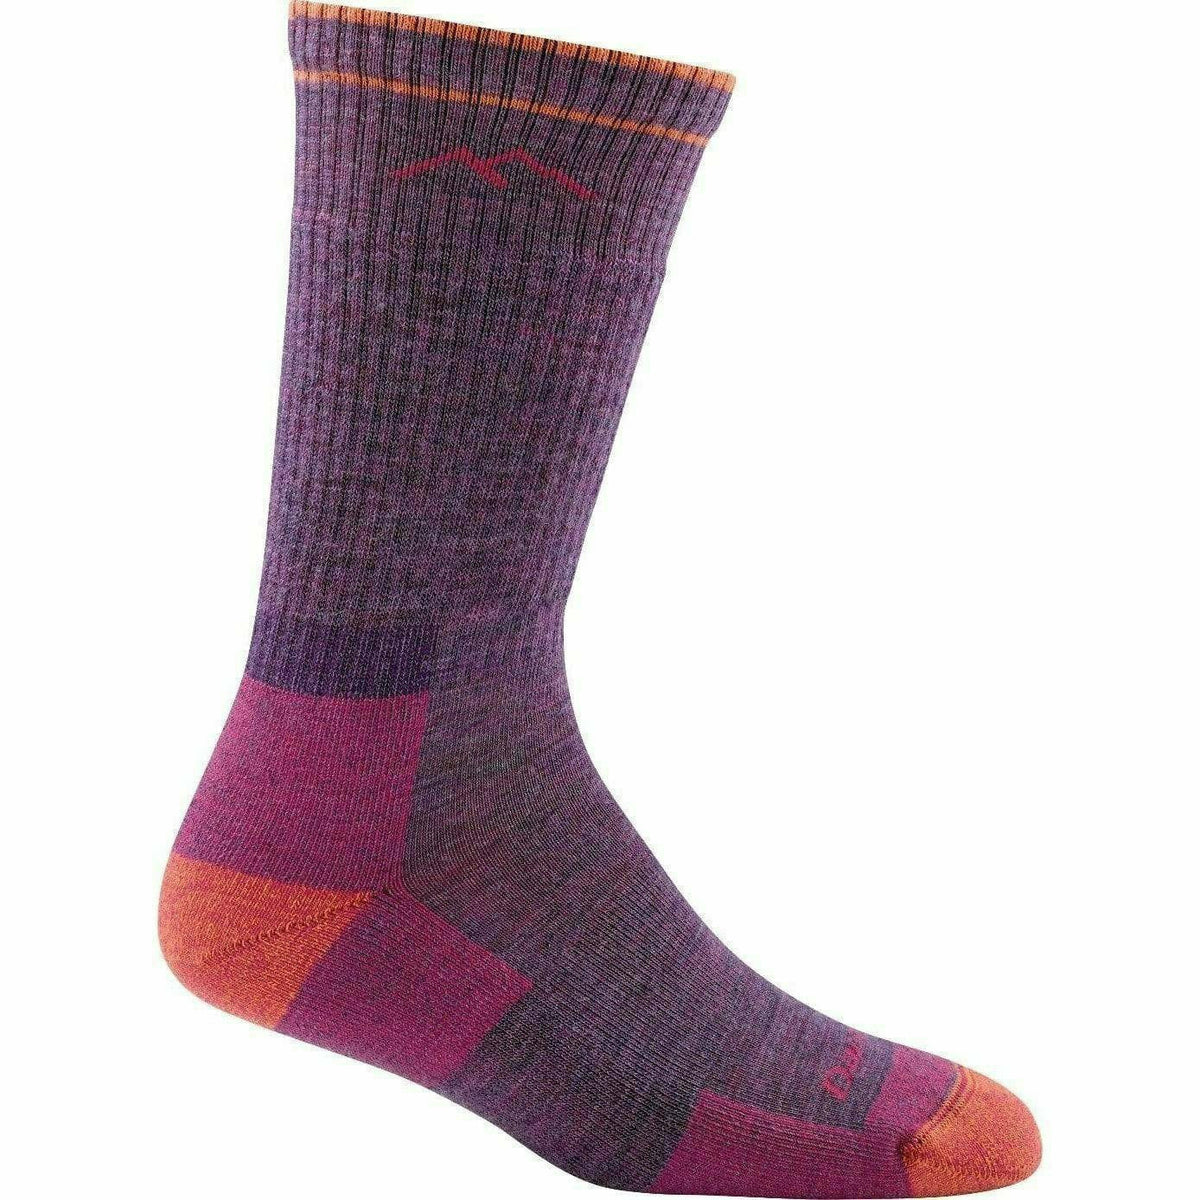 Darn Tough Socks | Free Shipping on orders $40+ at GoBros.com